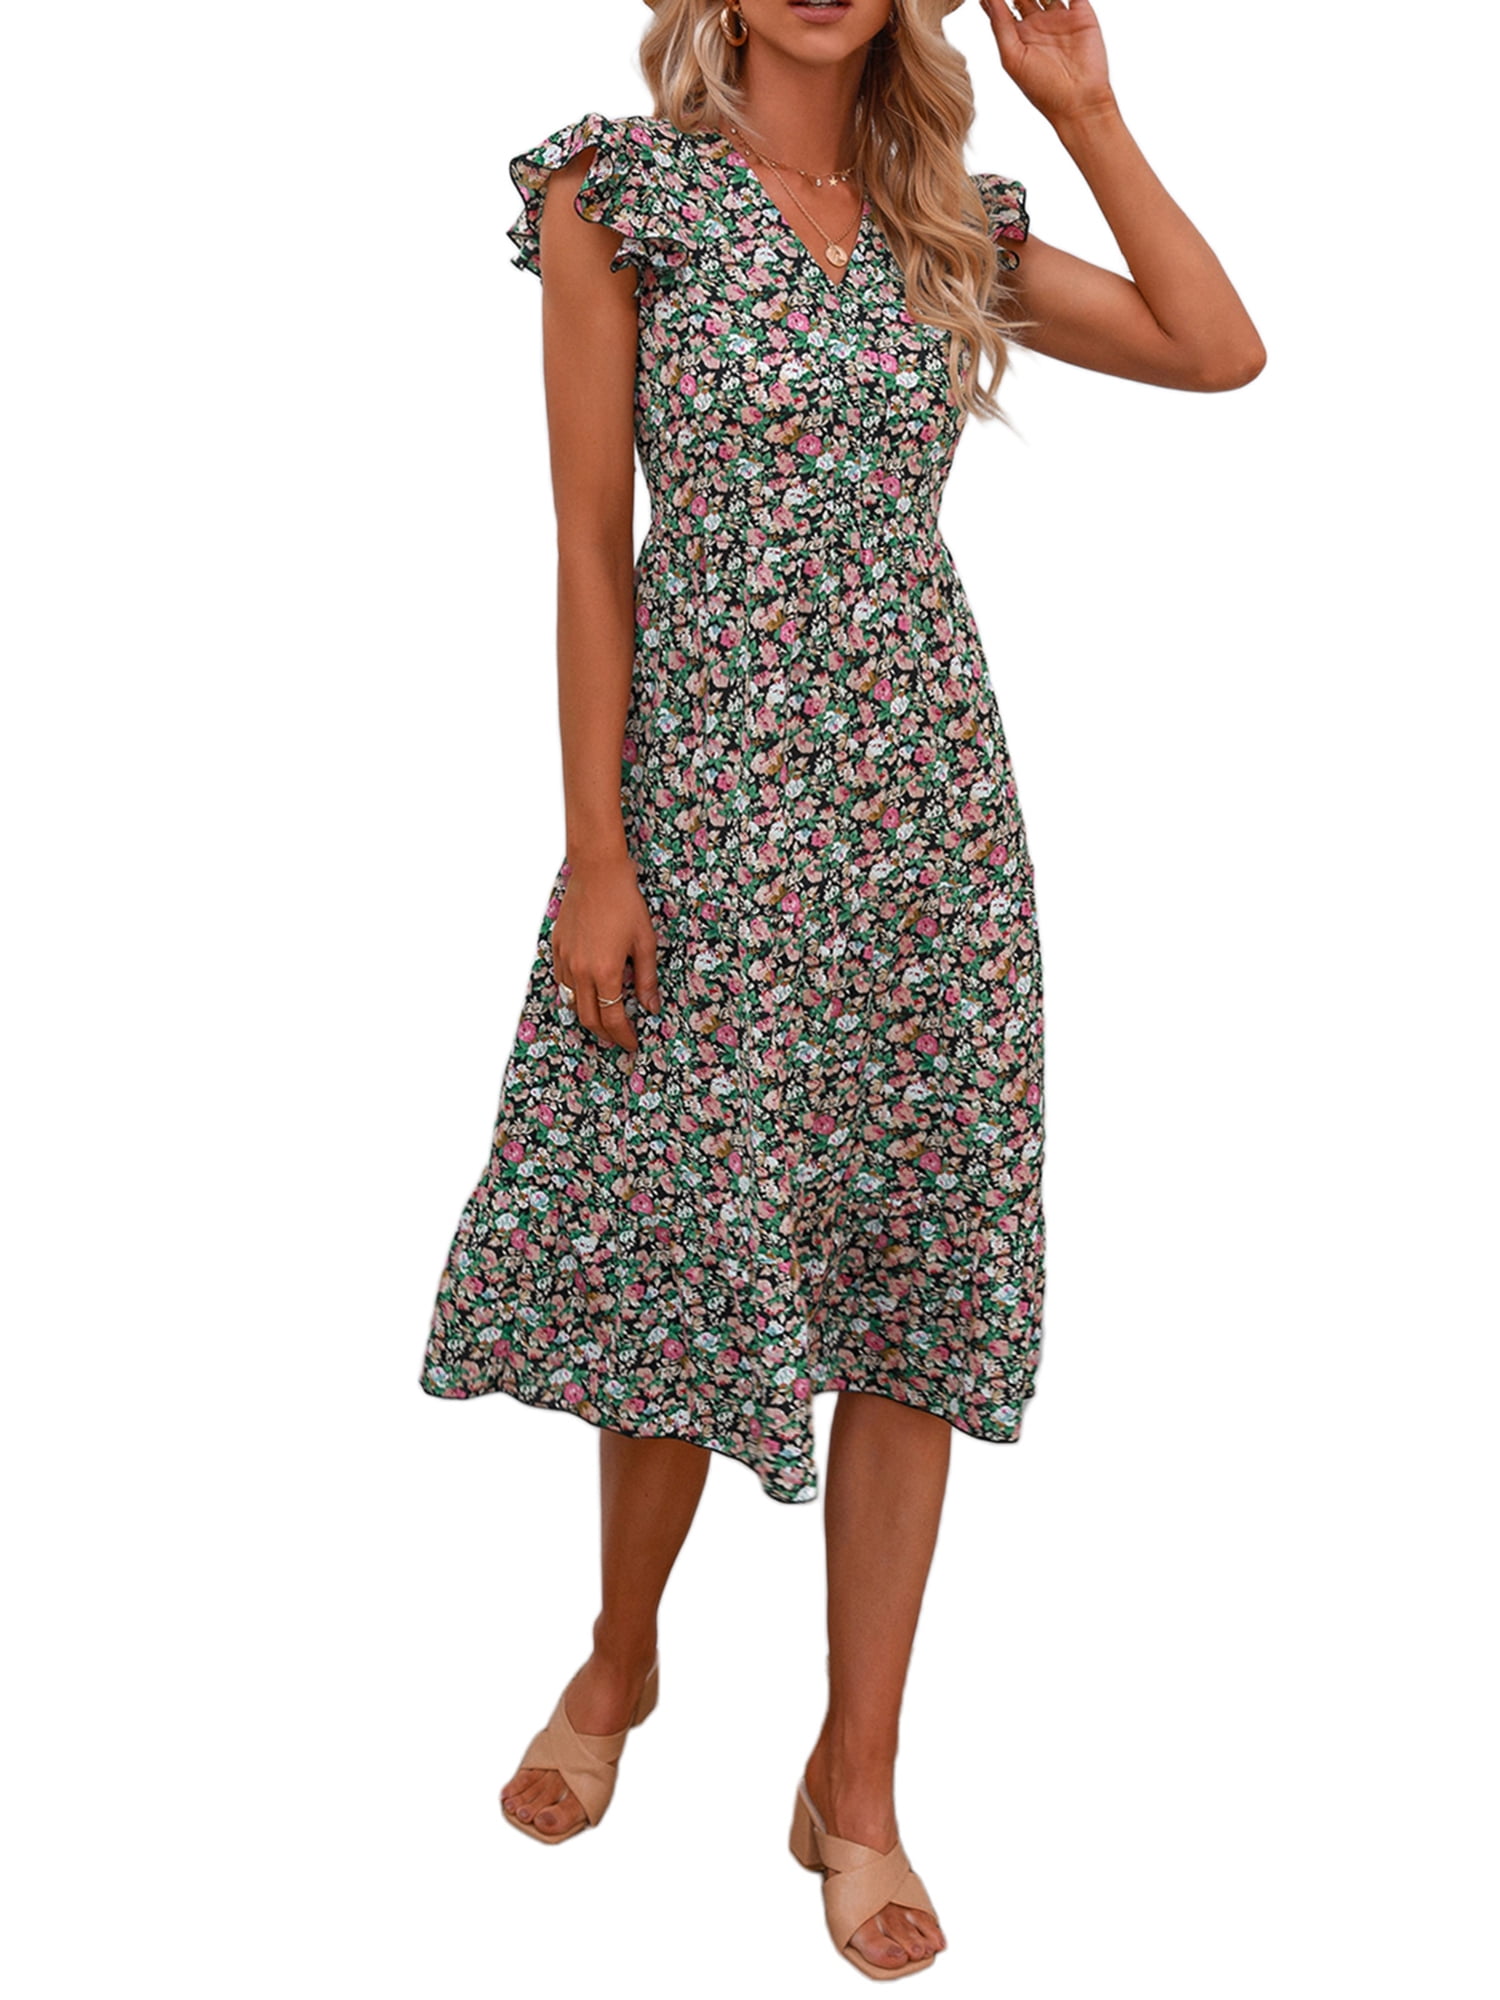 Floral Midi Dress for Women Summer V Neck Ruffle Cap Sleeve A-Line ...